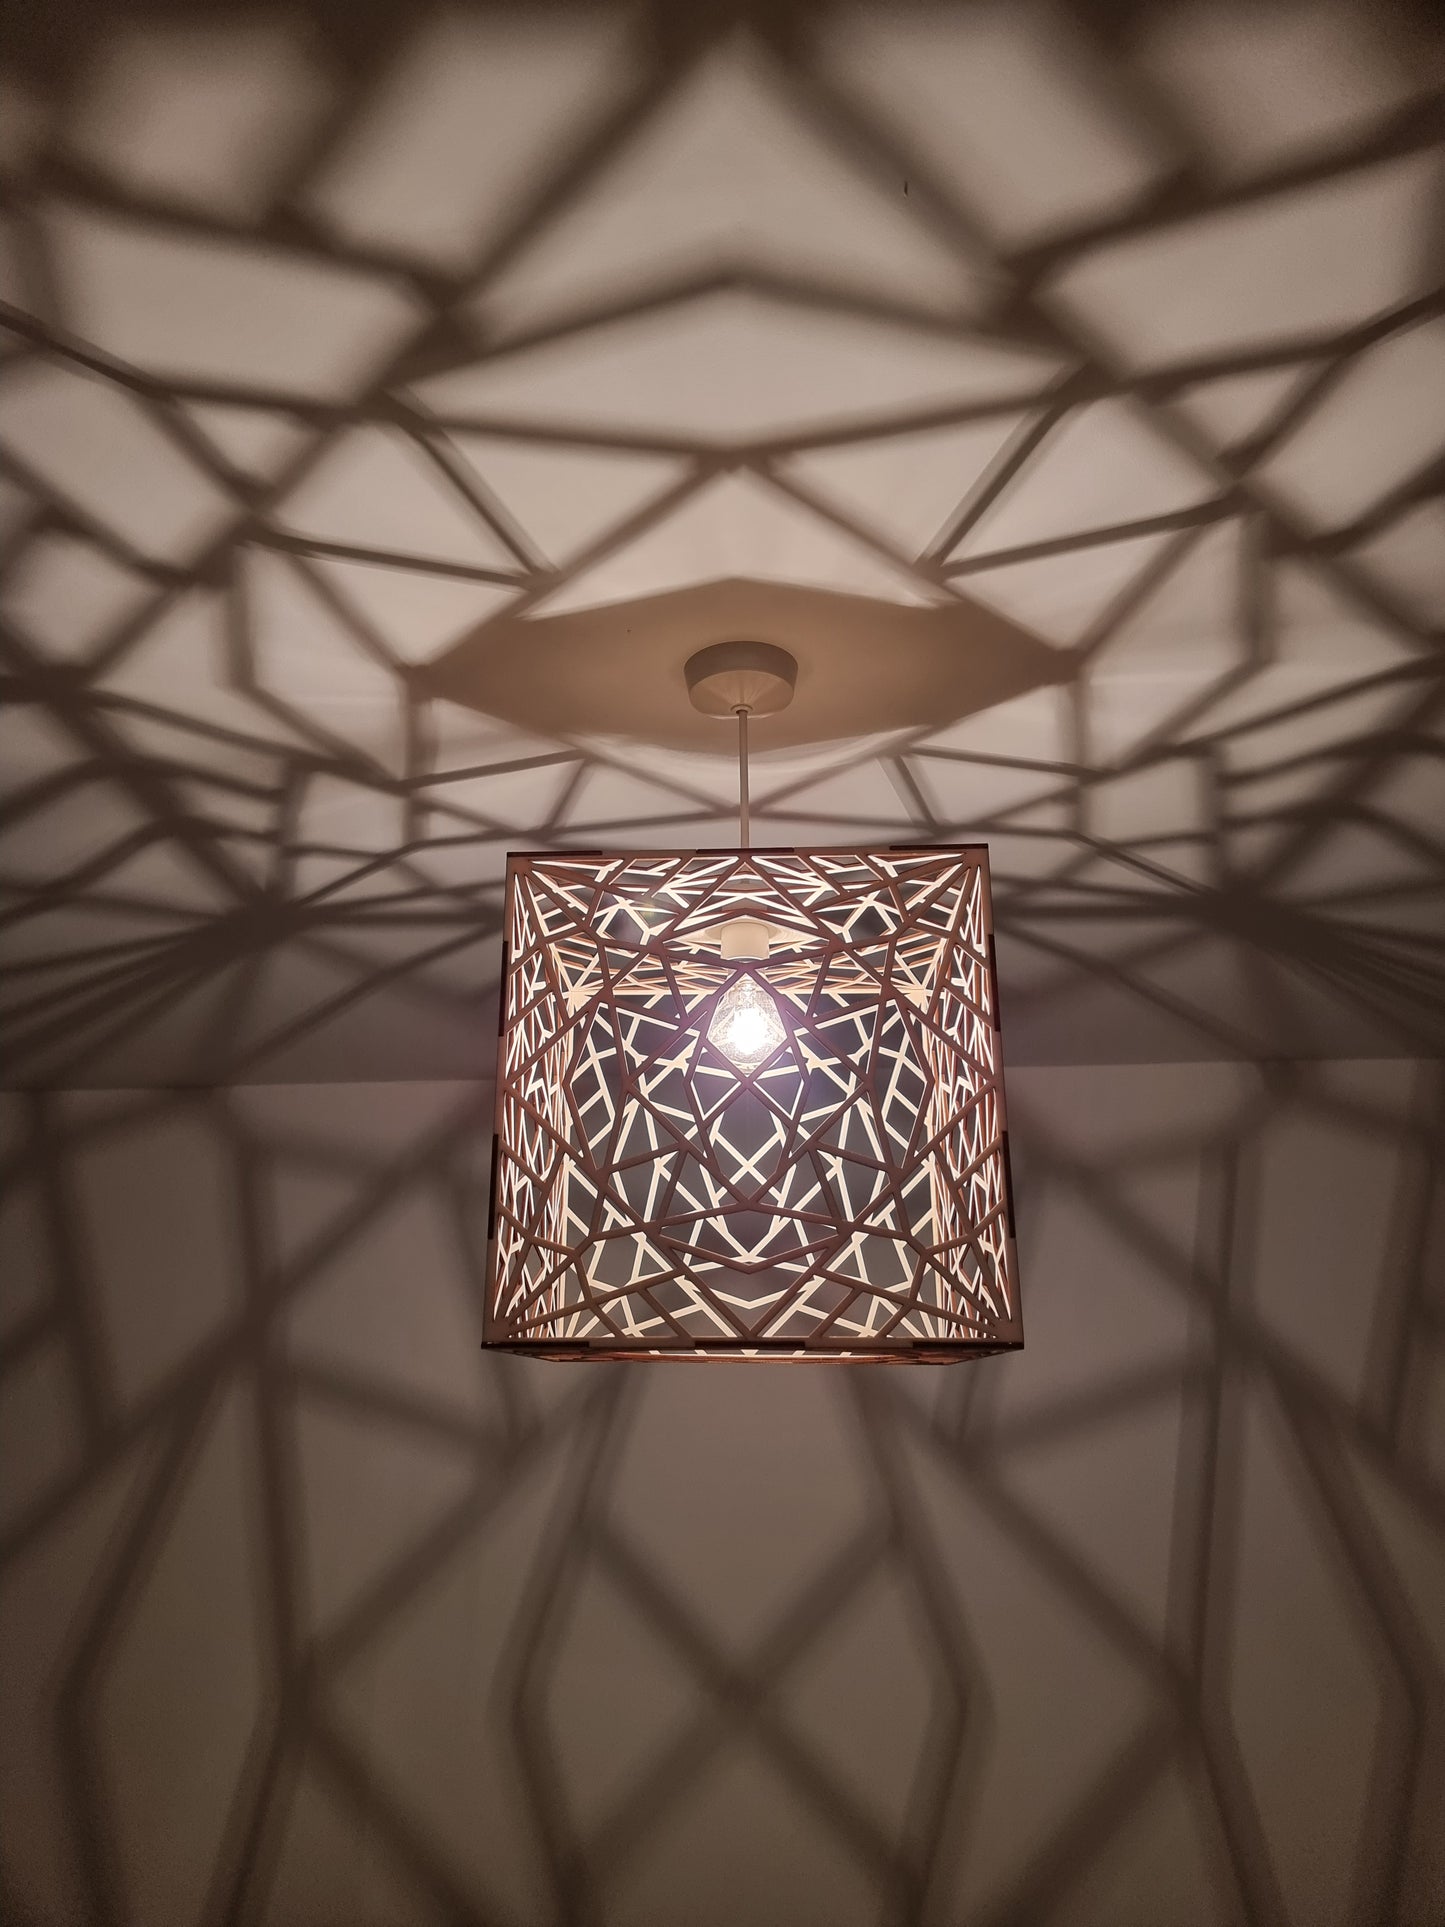 Geometric laser cut wooden light shade, home decor.